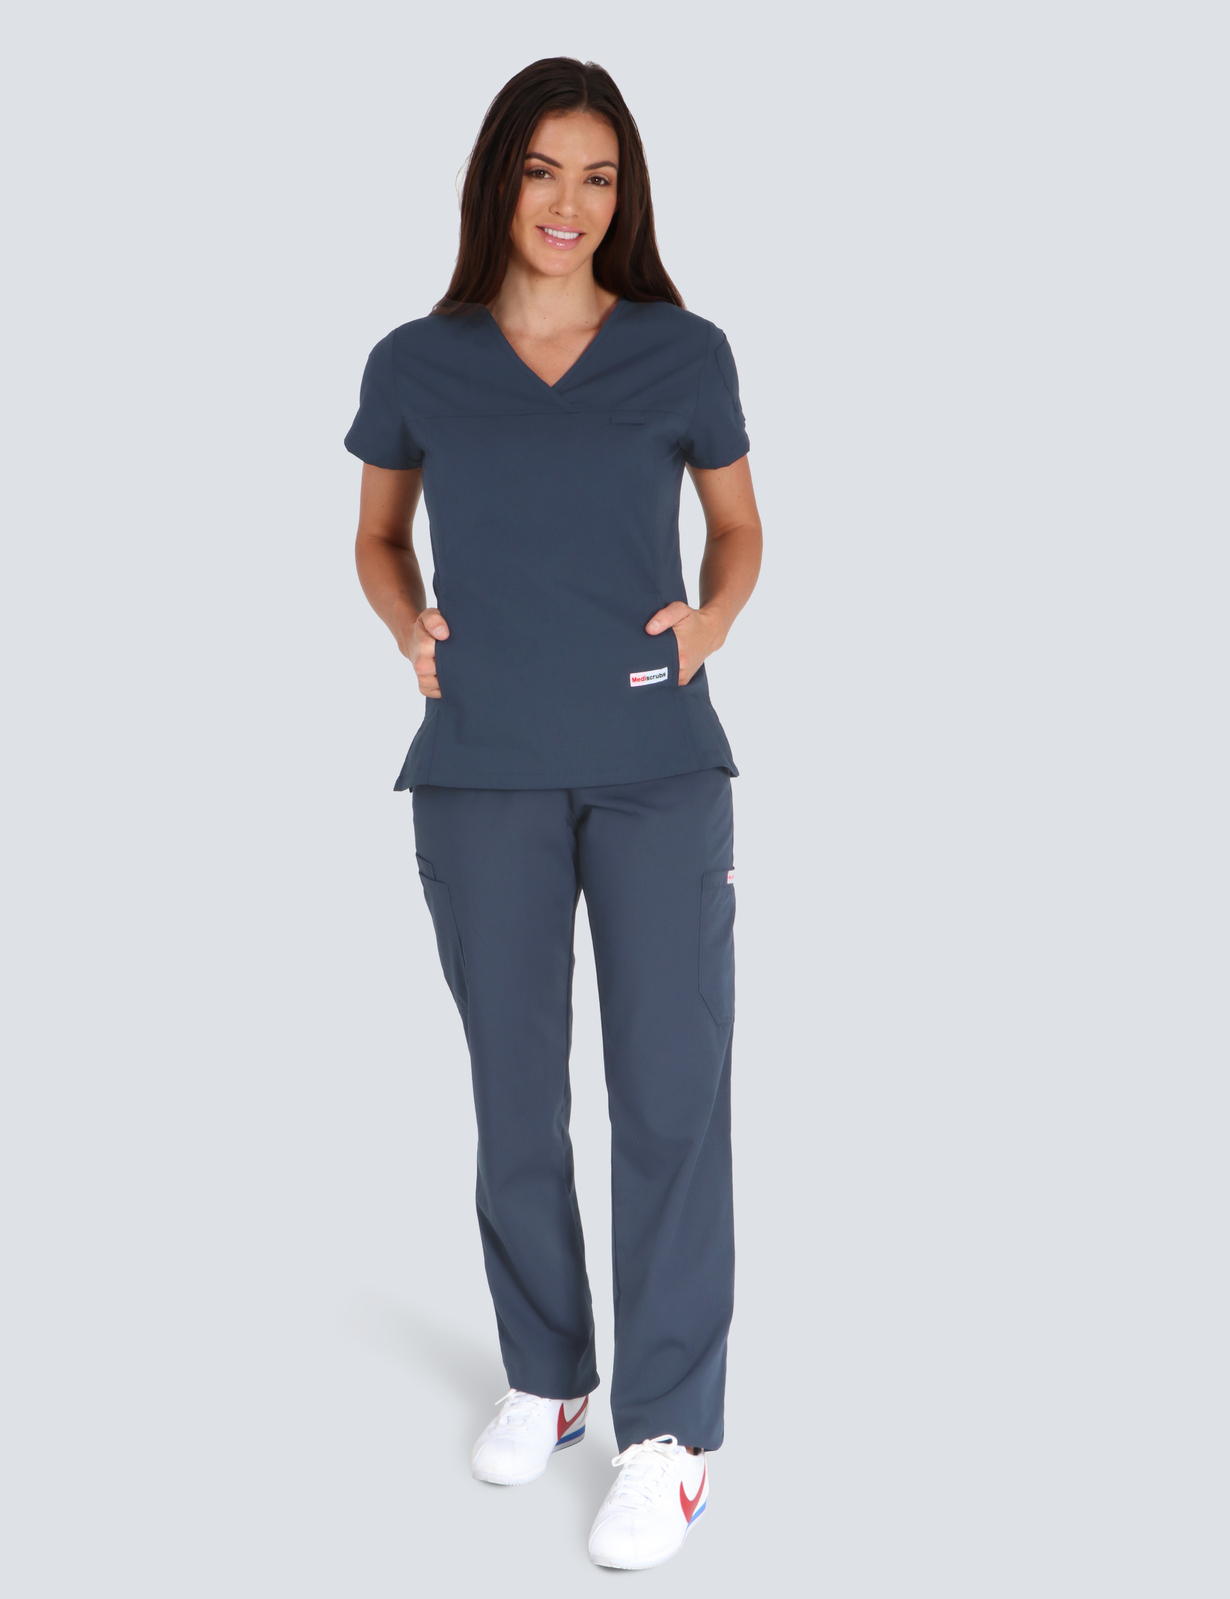 St Vincent's Hospital Emergency Department  Nurse Practitioner Uniform Set Bundle (Women's Fit Solid and Regular Pants in Navy incl logos)